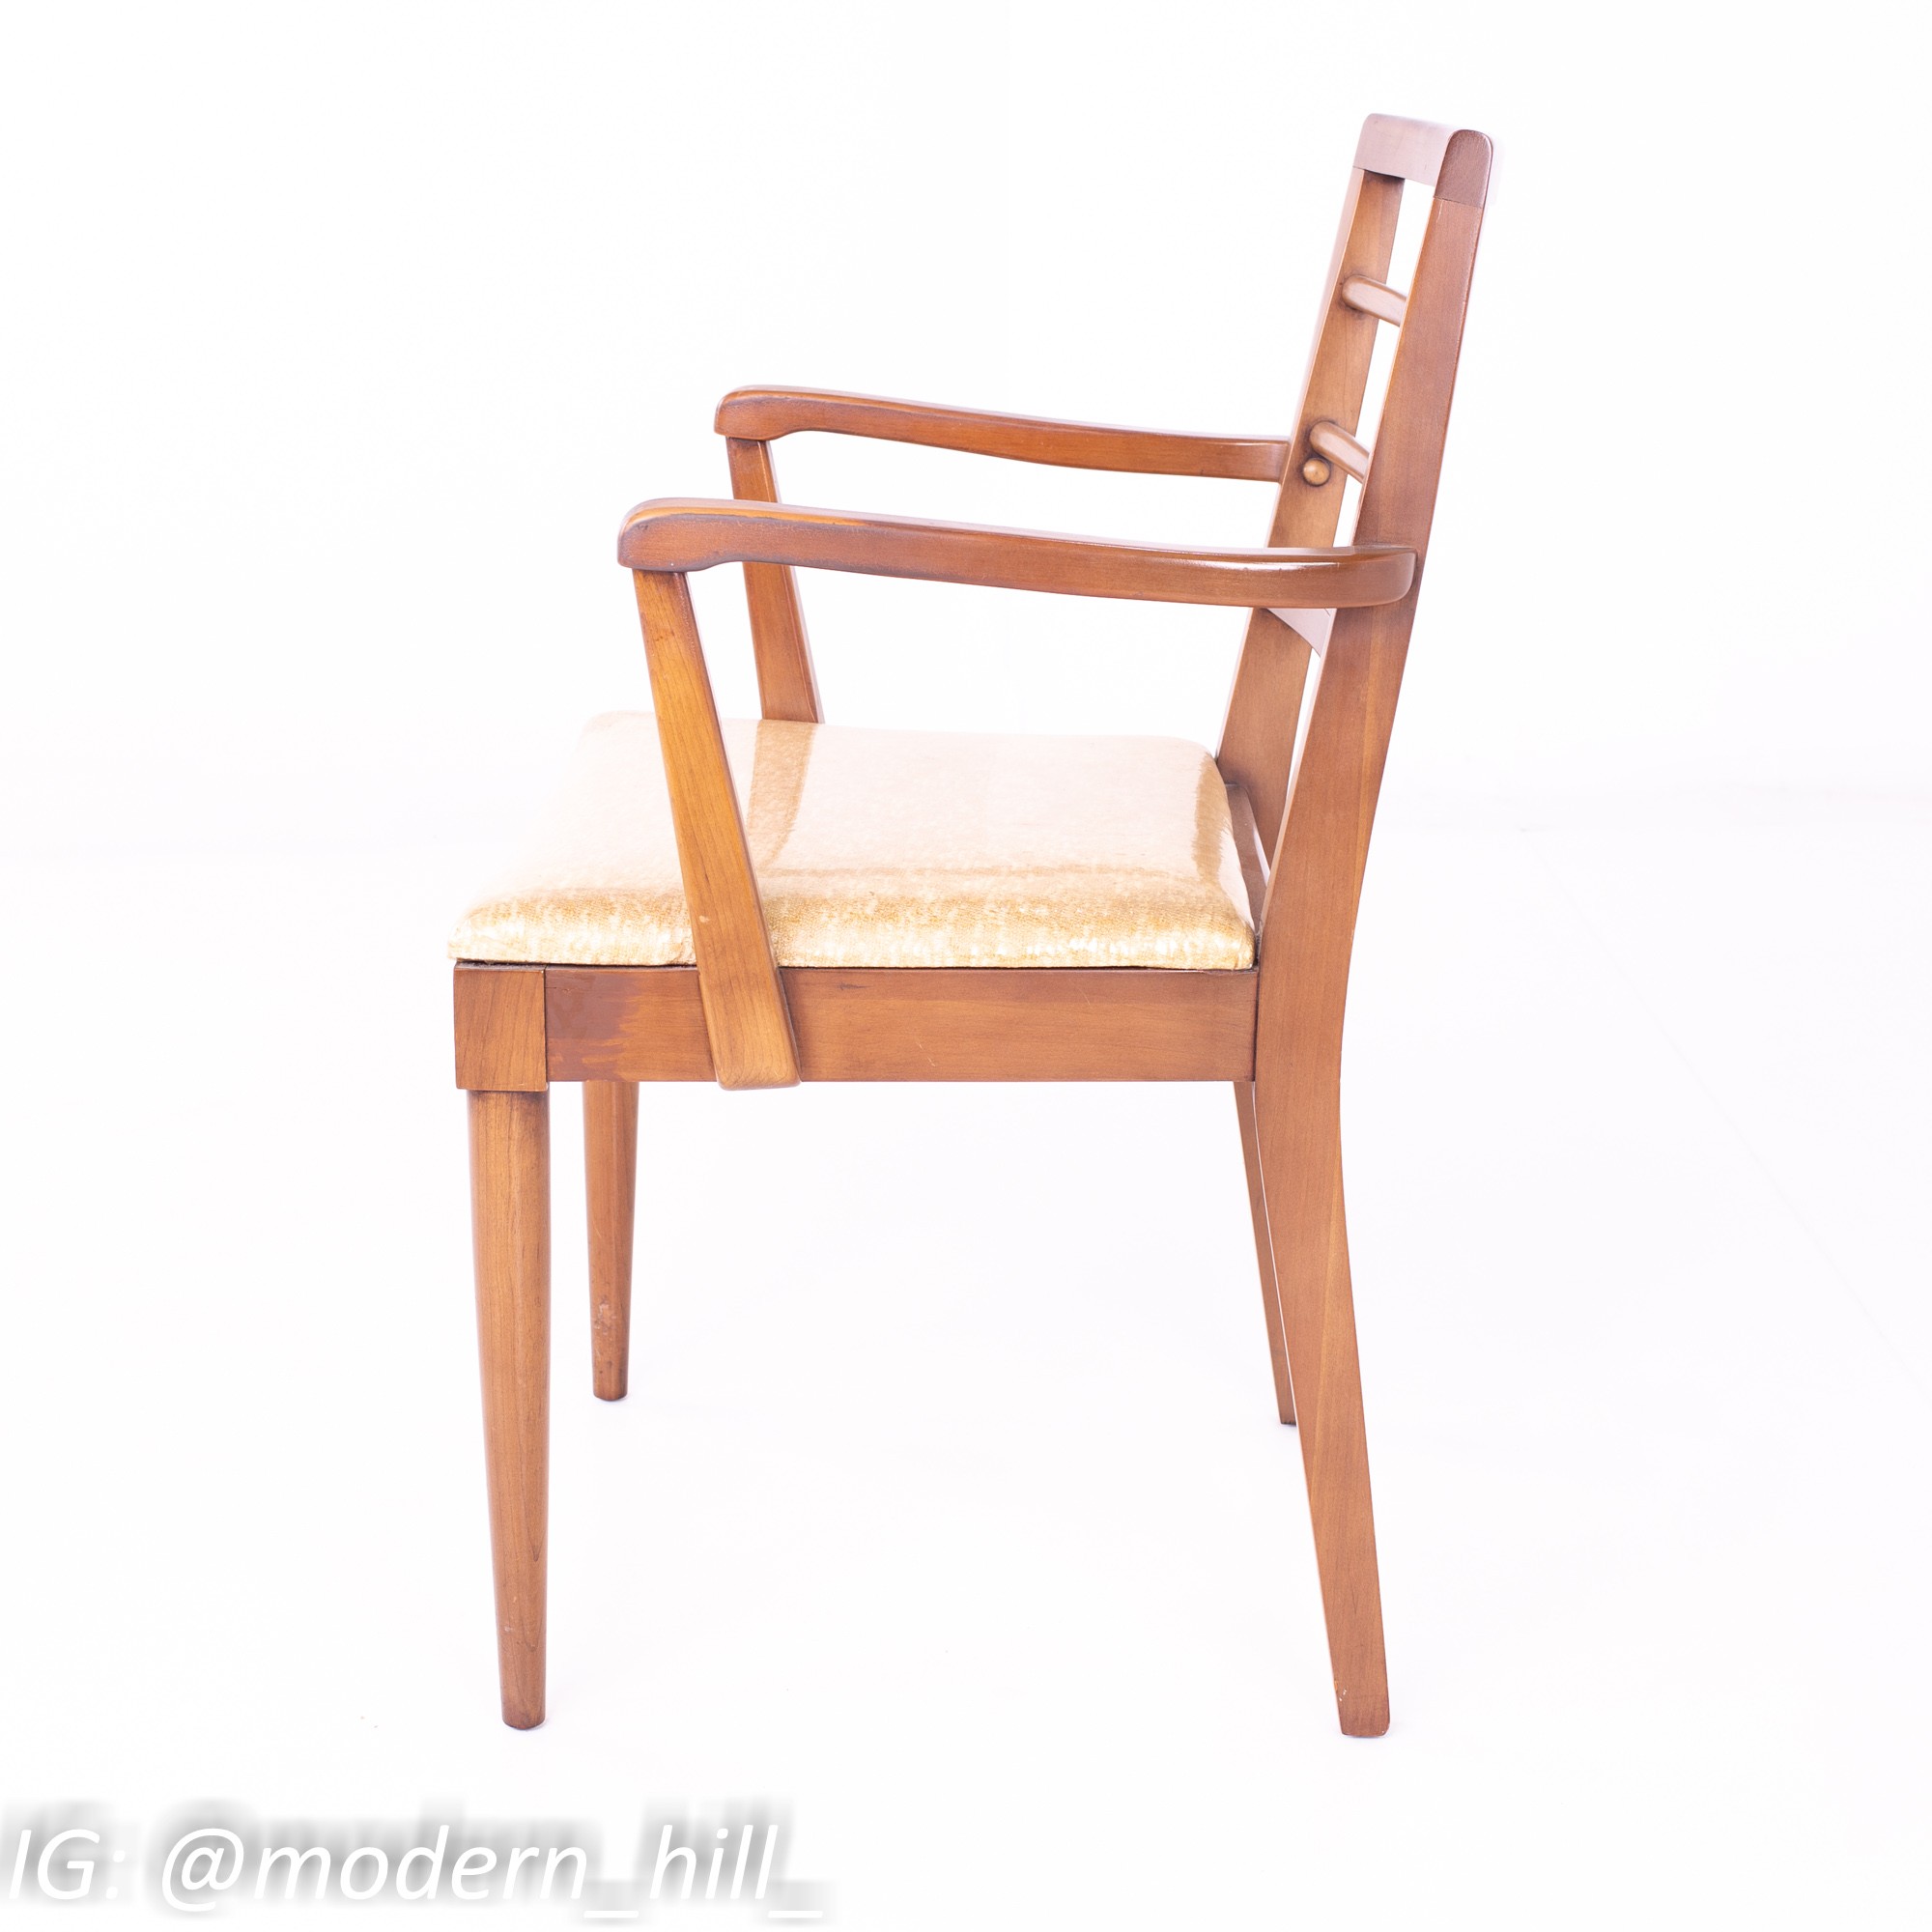 Morganton Ladderback Cherry Dining Chairs - Set of 6